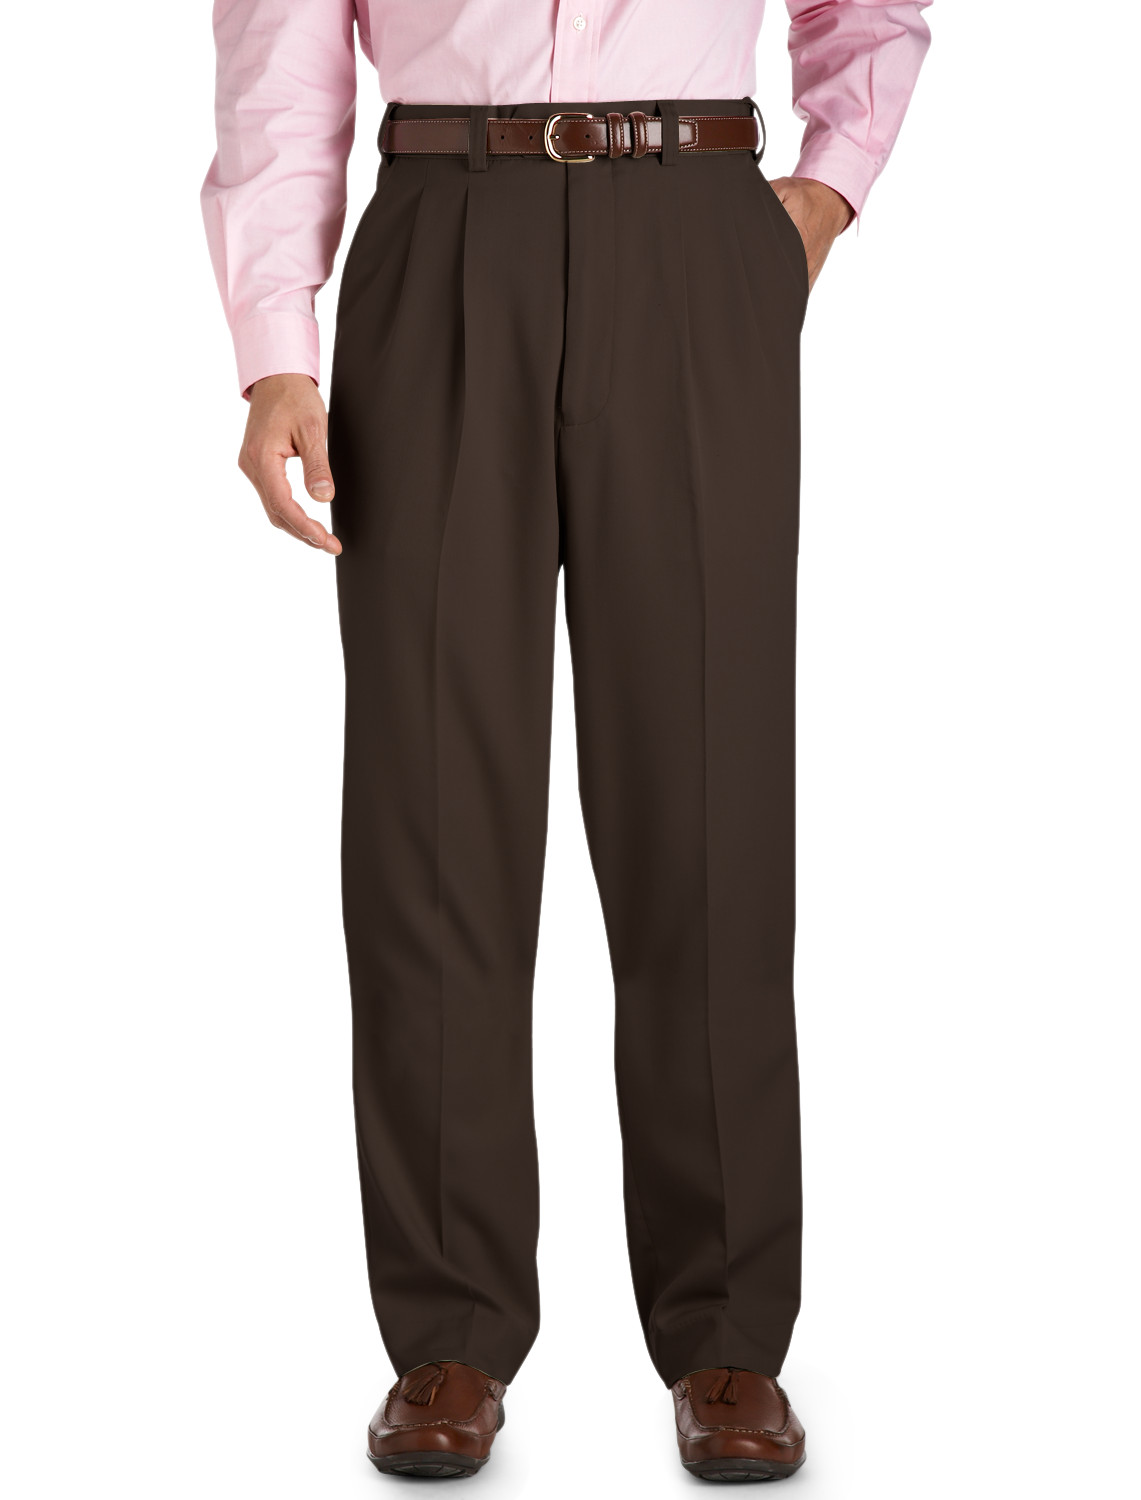 Gold Series Hemmed Pants Casual Male XL Big Tall | eBay